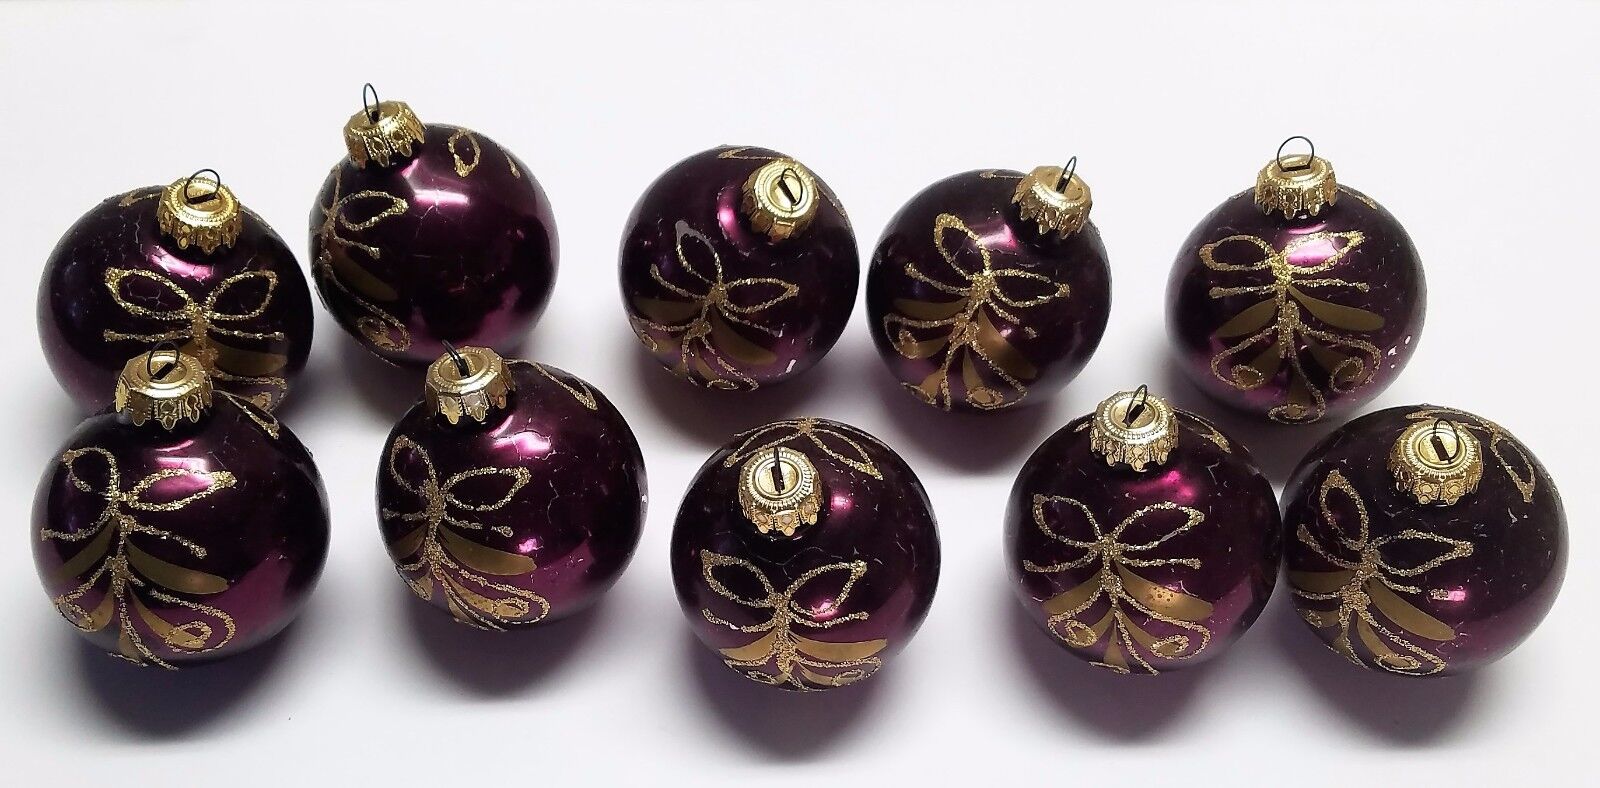 14 Vintage Glass Ball Christmas Ornaments, Purple Gold, Glittery Holiday Lot Set